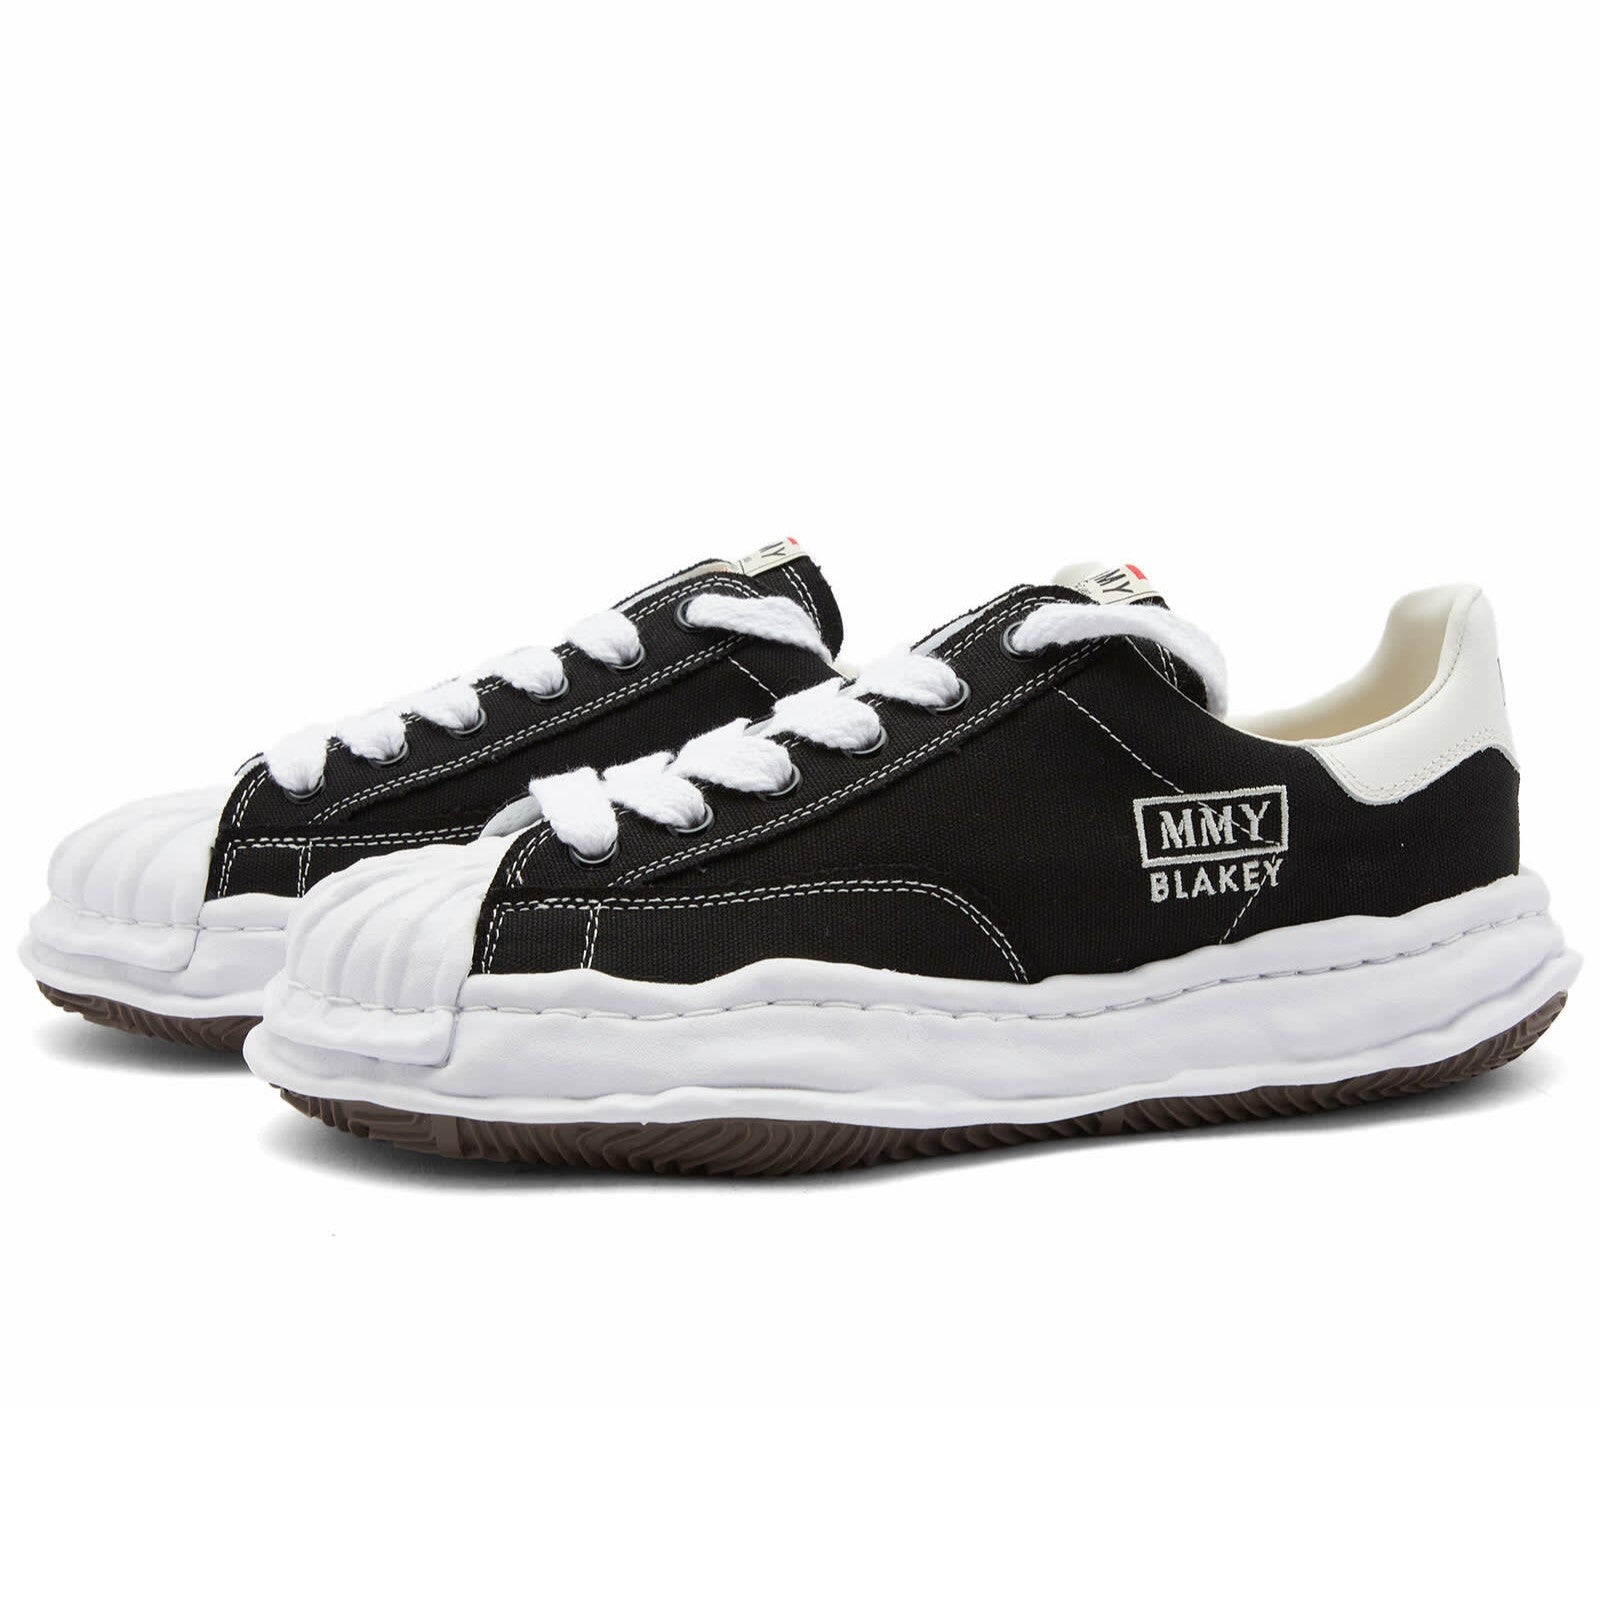 MMY "BLAKEY" OG Sole Canvas Low-top Sneaker - Black